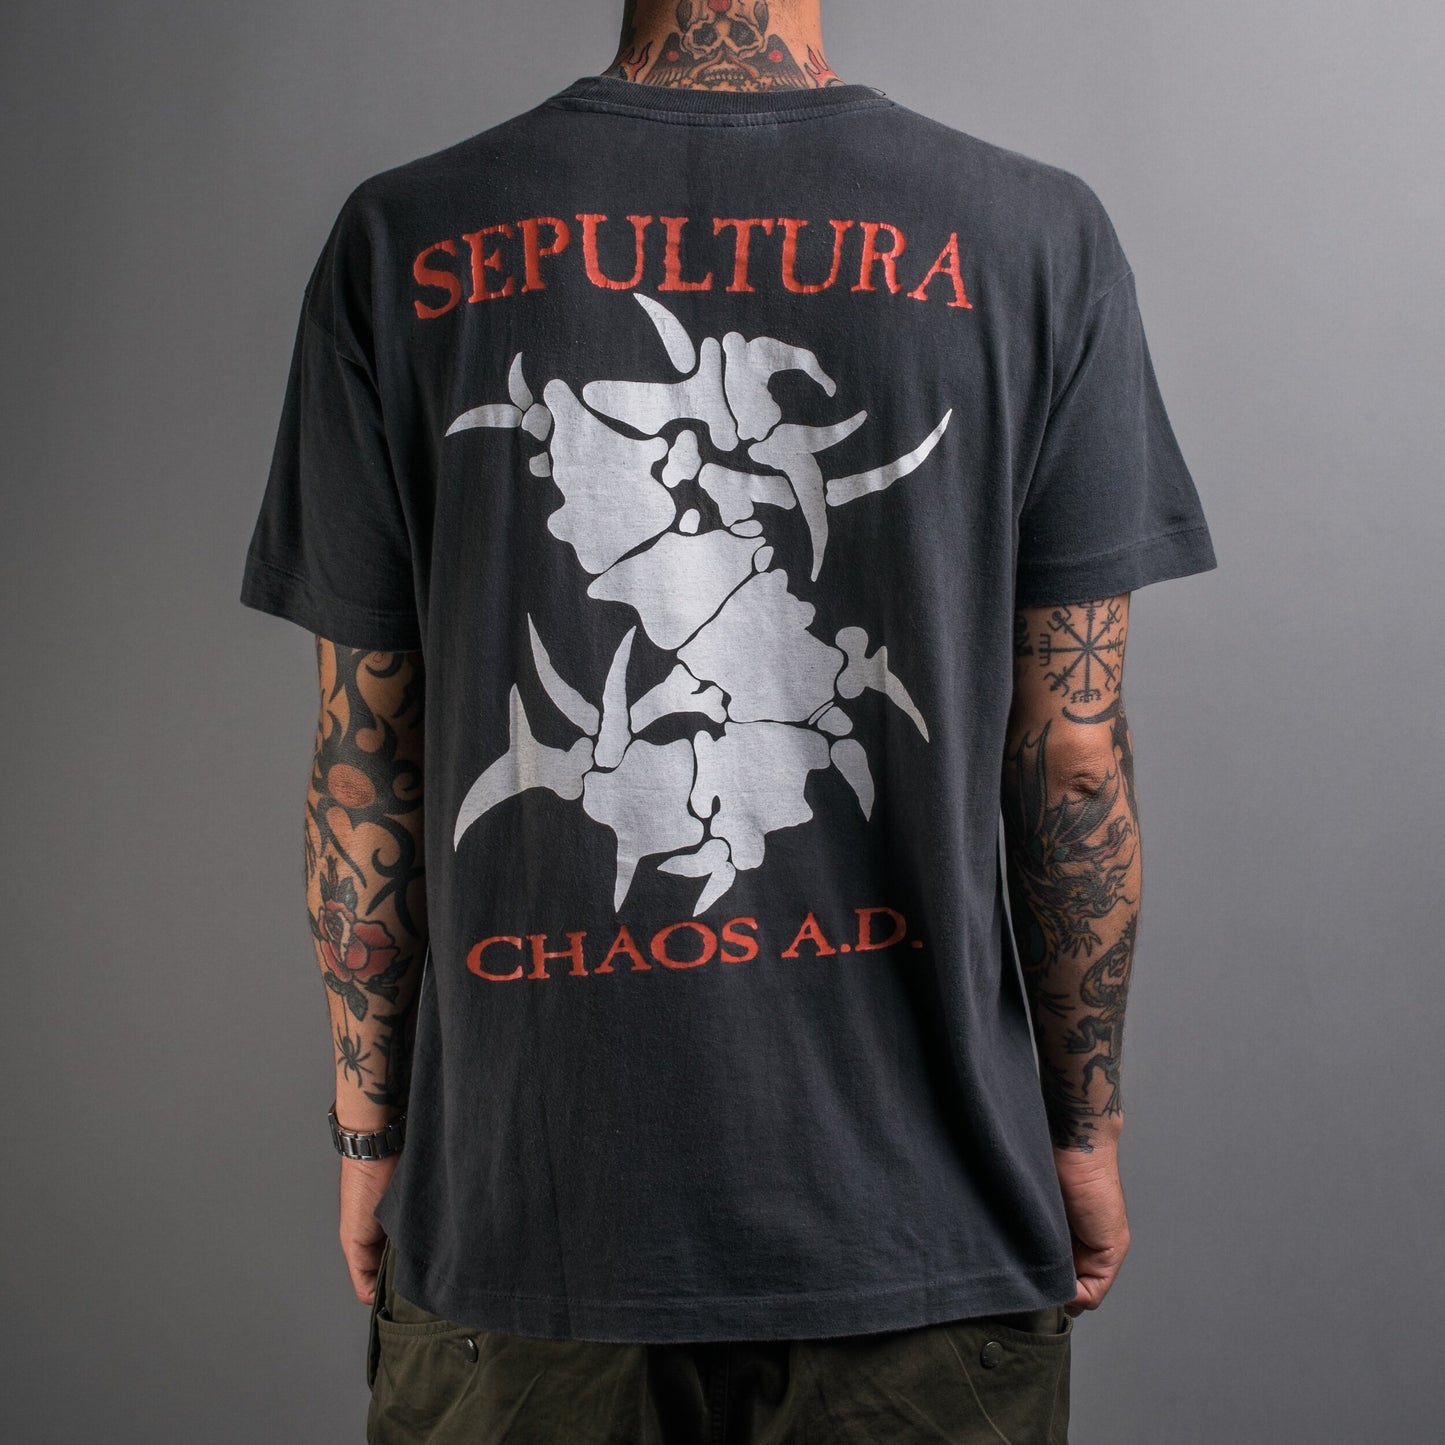 Vintage 90’s Sepultura Chaos AD T-Shirt